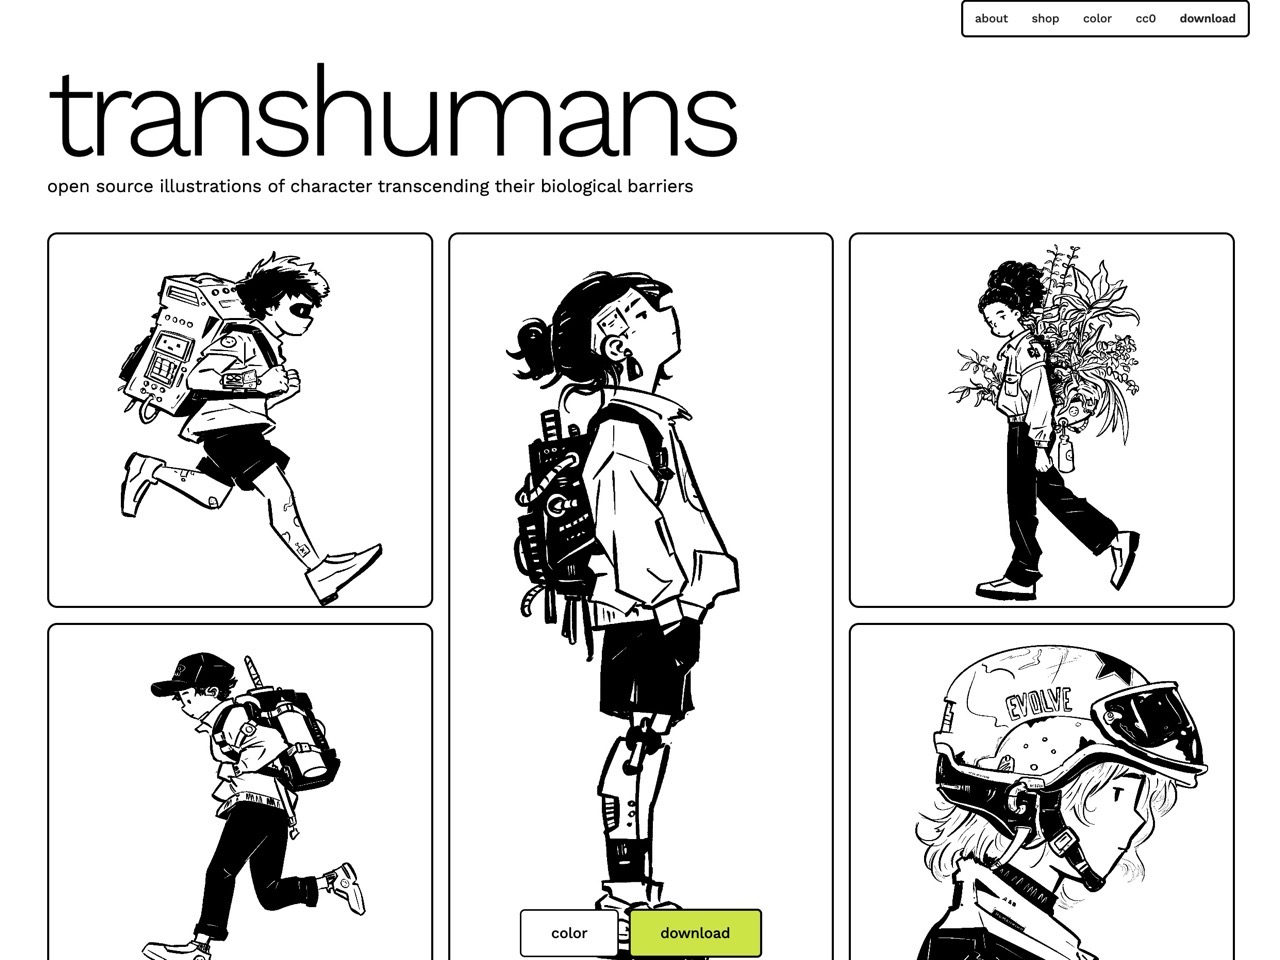 Transhumans 插畫藝術的超人類之旅，插畫家作品免費下載可商用